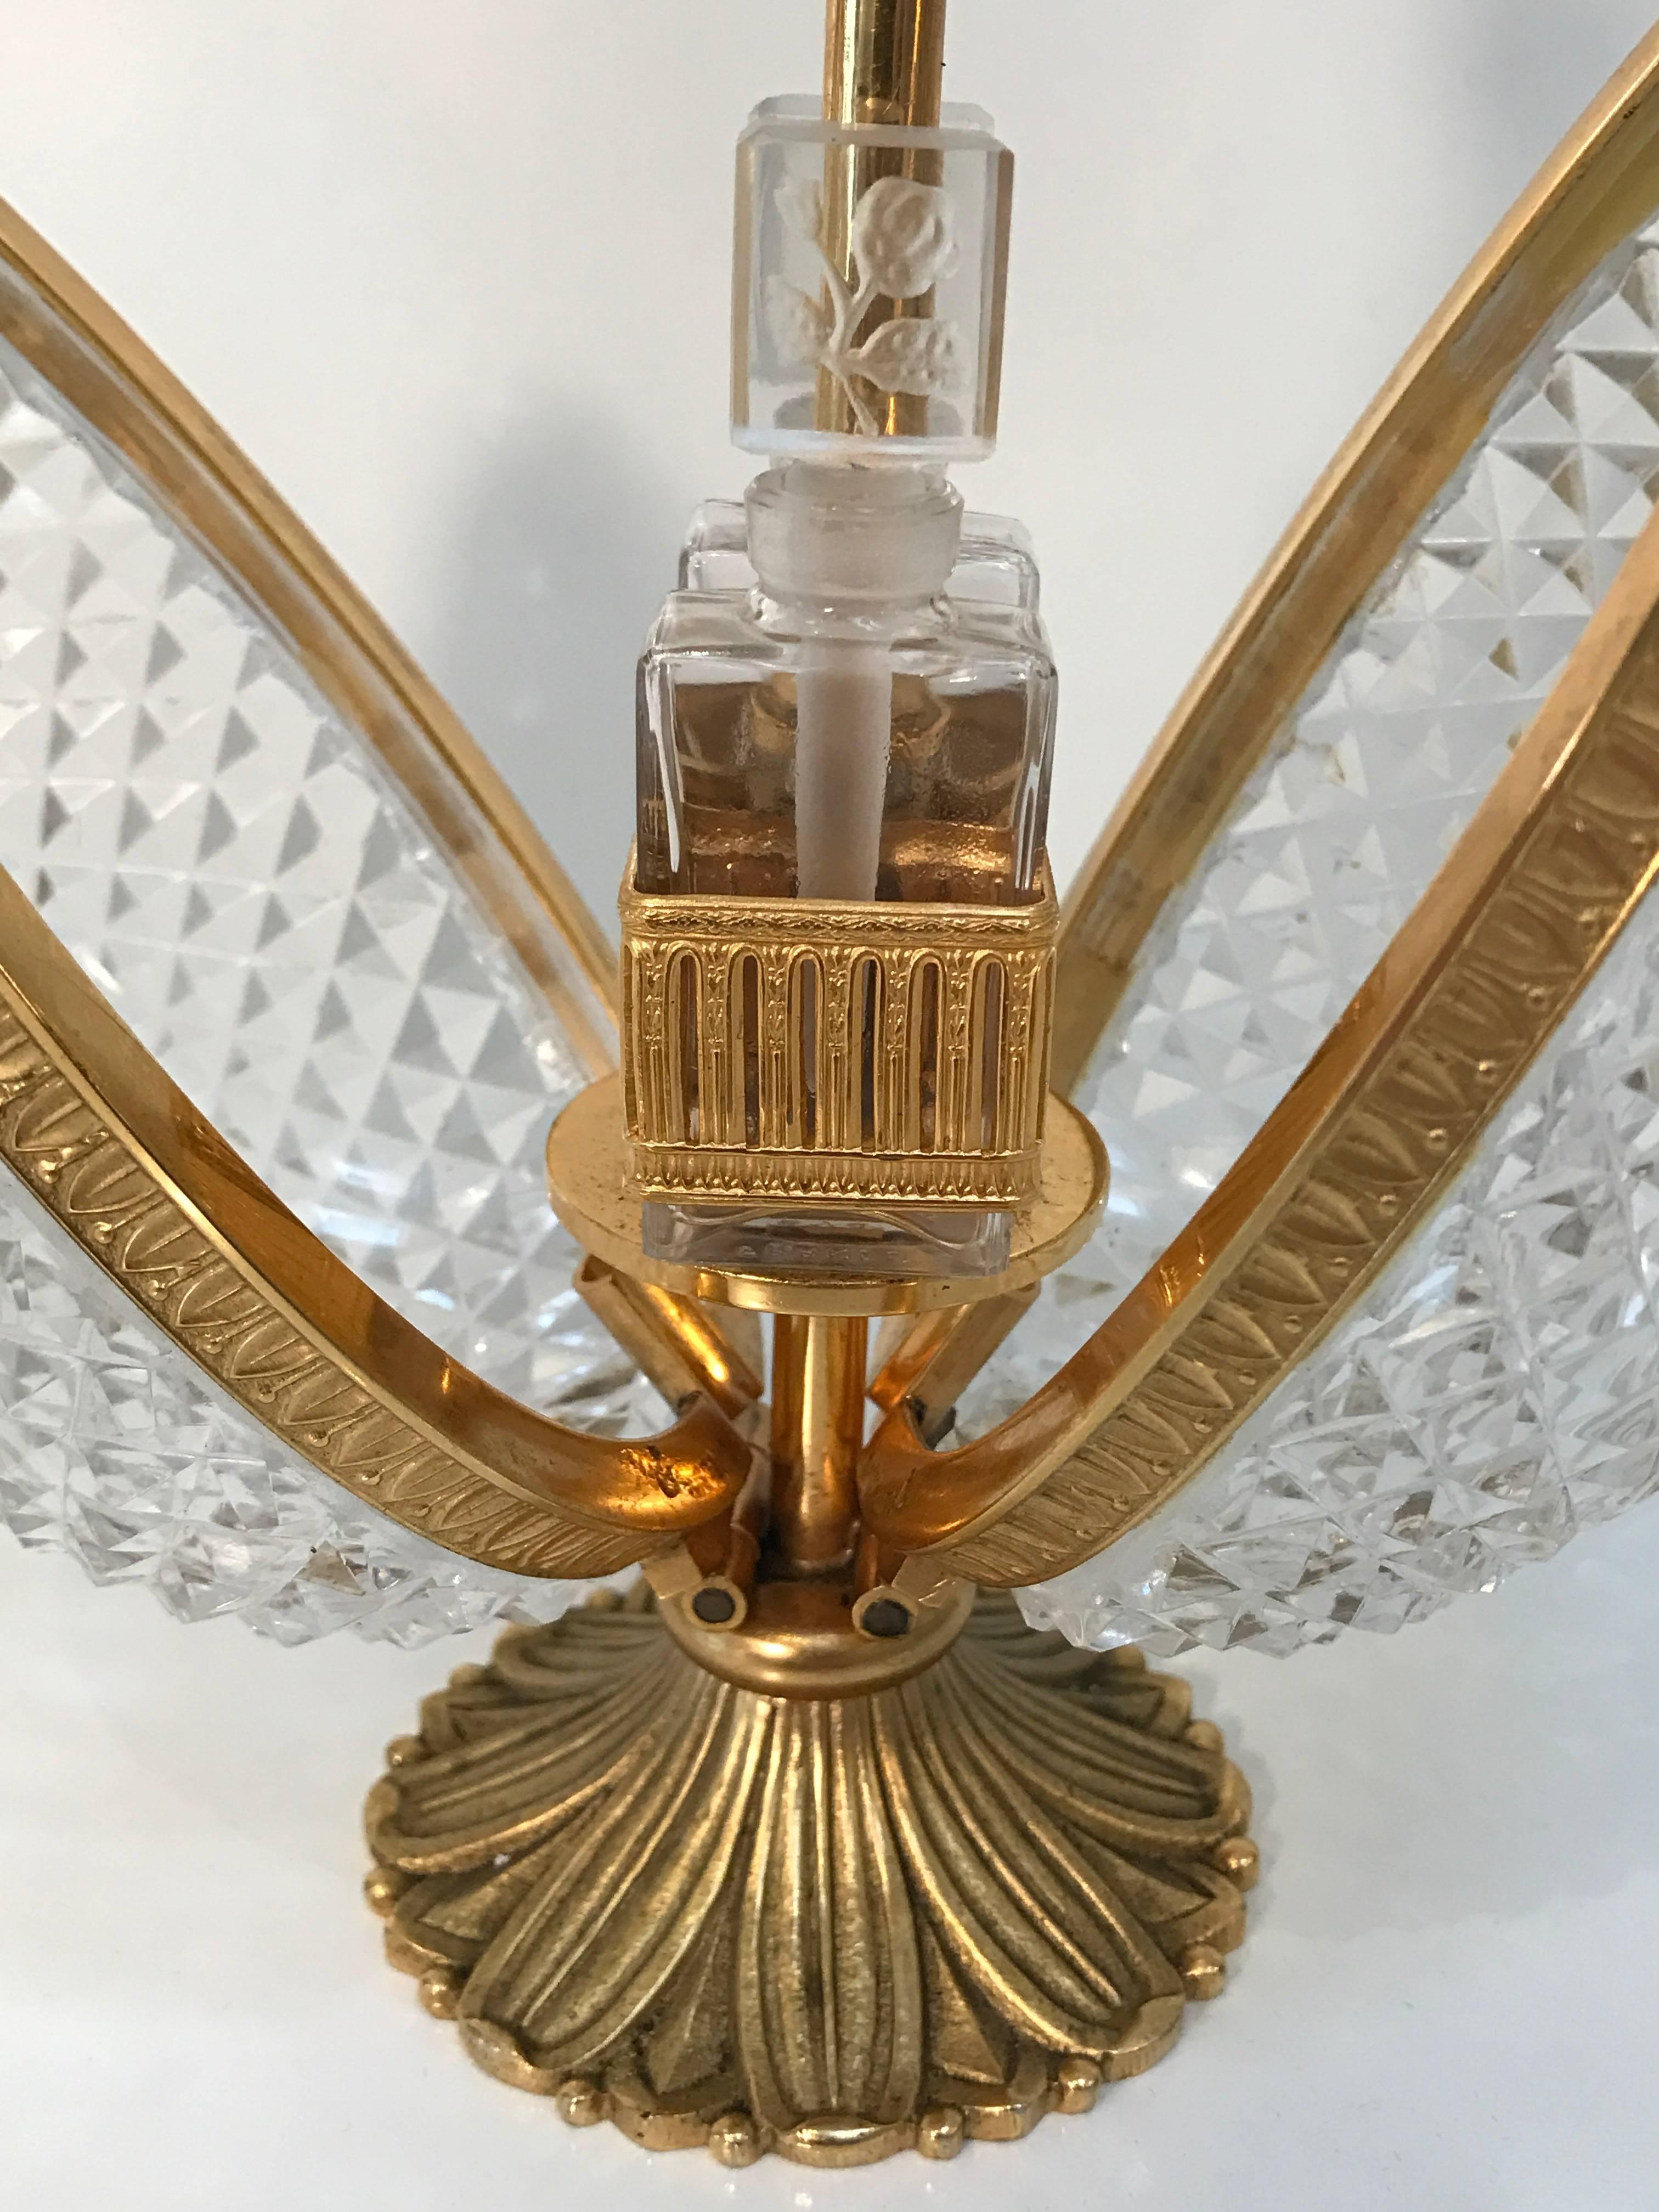 20th Century French Ormolu-Mounted Crystal Egg Perfume